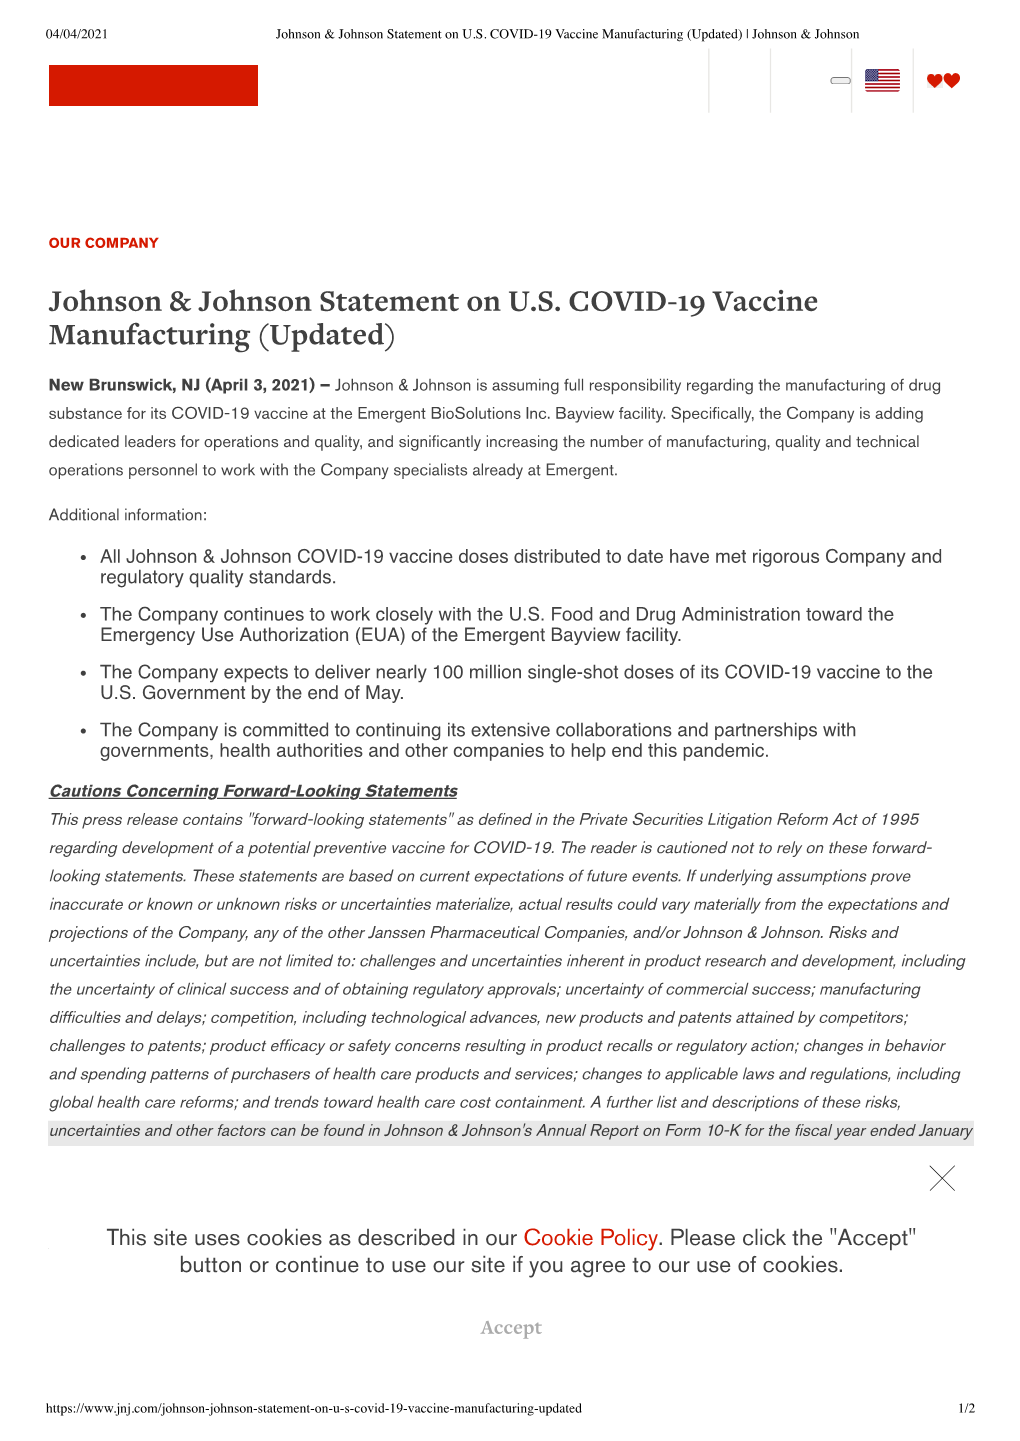 Johnson & Johnson Statement on US COVID-19 Vaccine Manufacturing